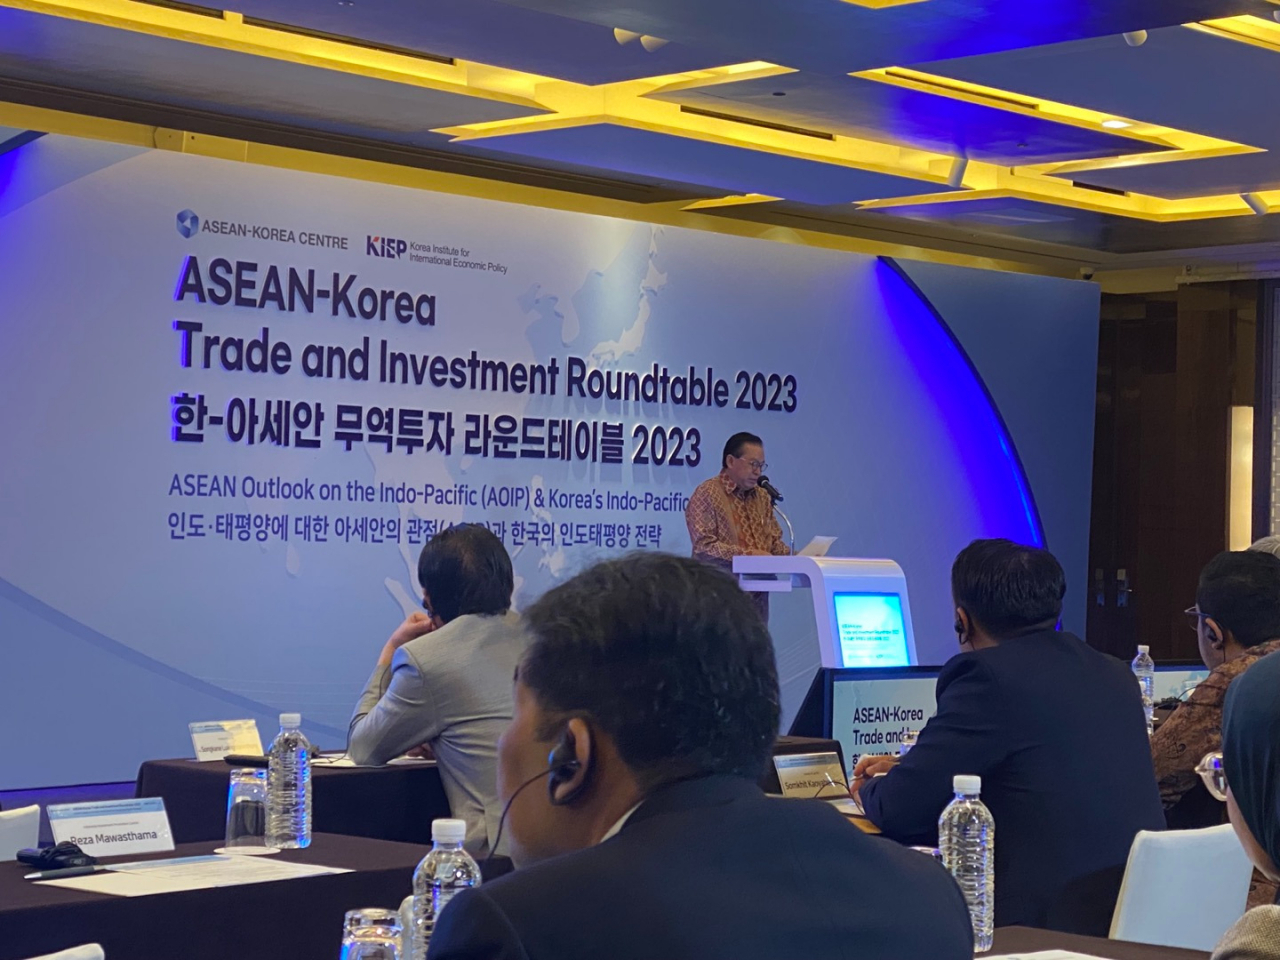 Indonesian Ambassador to Korea Gandi Sulistiyanto delivers congratulatory remarks at the ASEAN-Korea Trade and Investment Roundtable 2023 at the Westin Josun Hotel in Jung-gu, Seoul. (Sanjay Kumar/The Korea Herald)